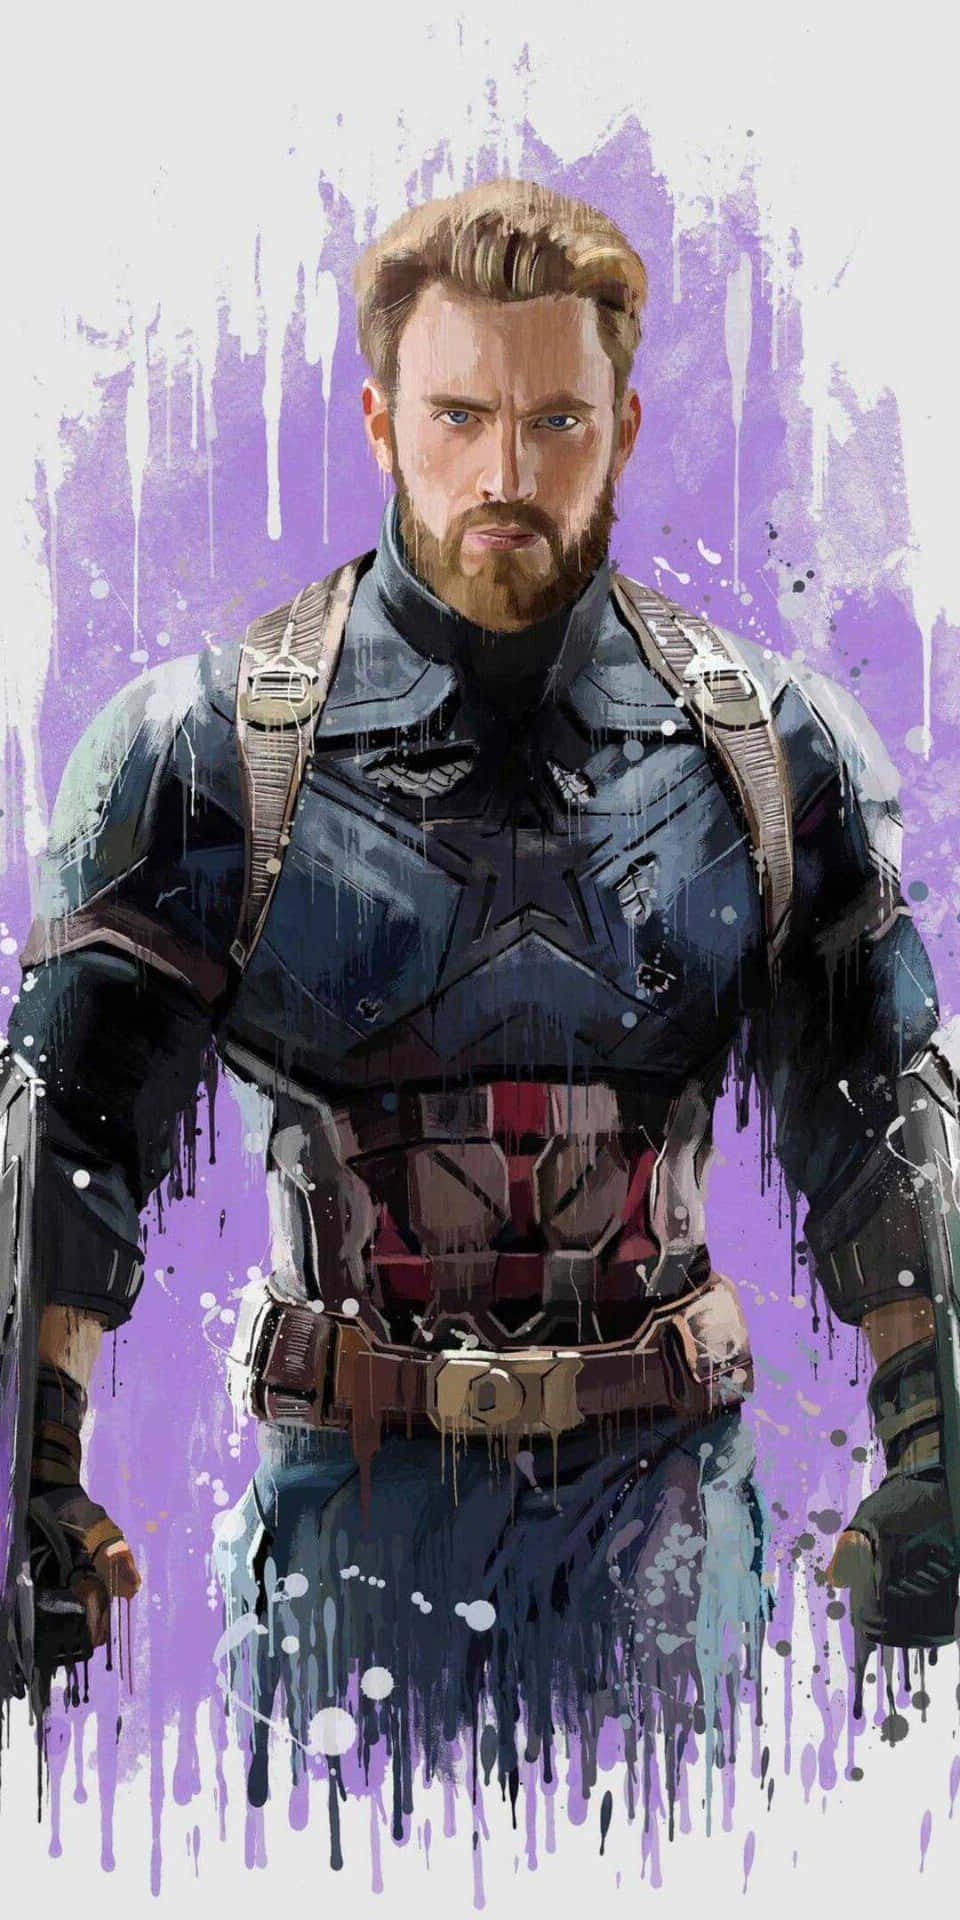 Pixel3 Bakgrundsbild Med Captain America-fan Konst